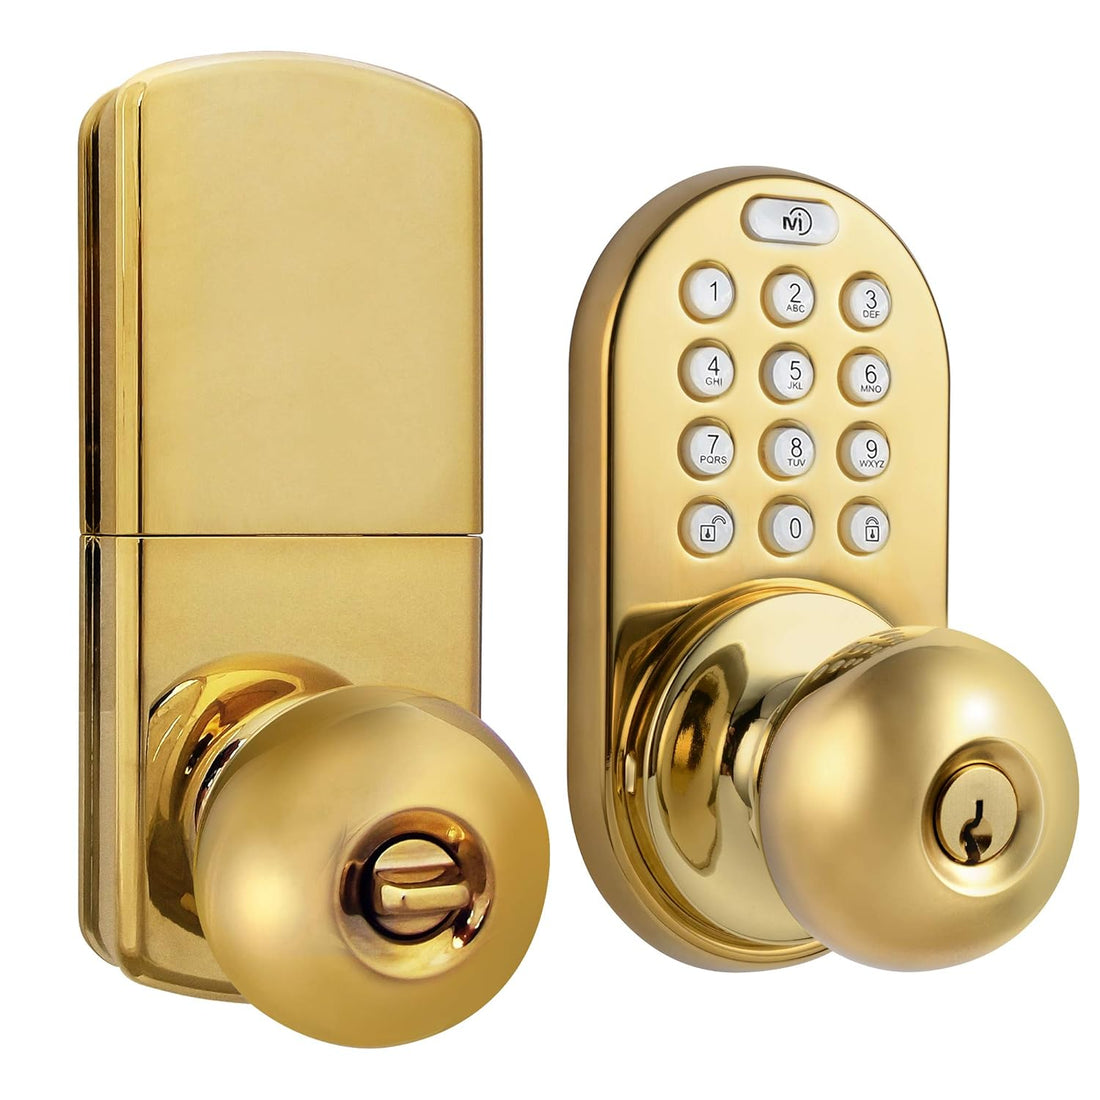 MiLocks DKK-02P Electronic Touchpad Entry Keyless Door Lock, Polished Brass